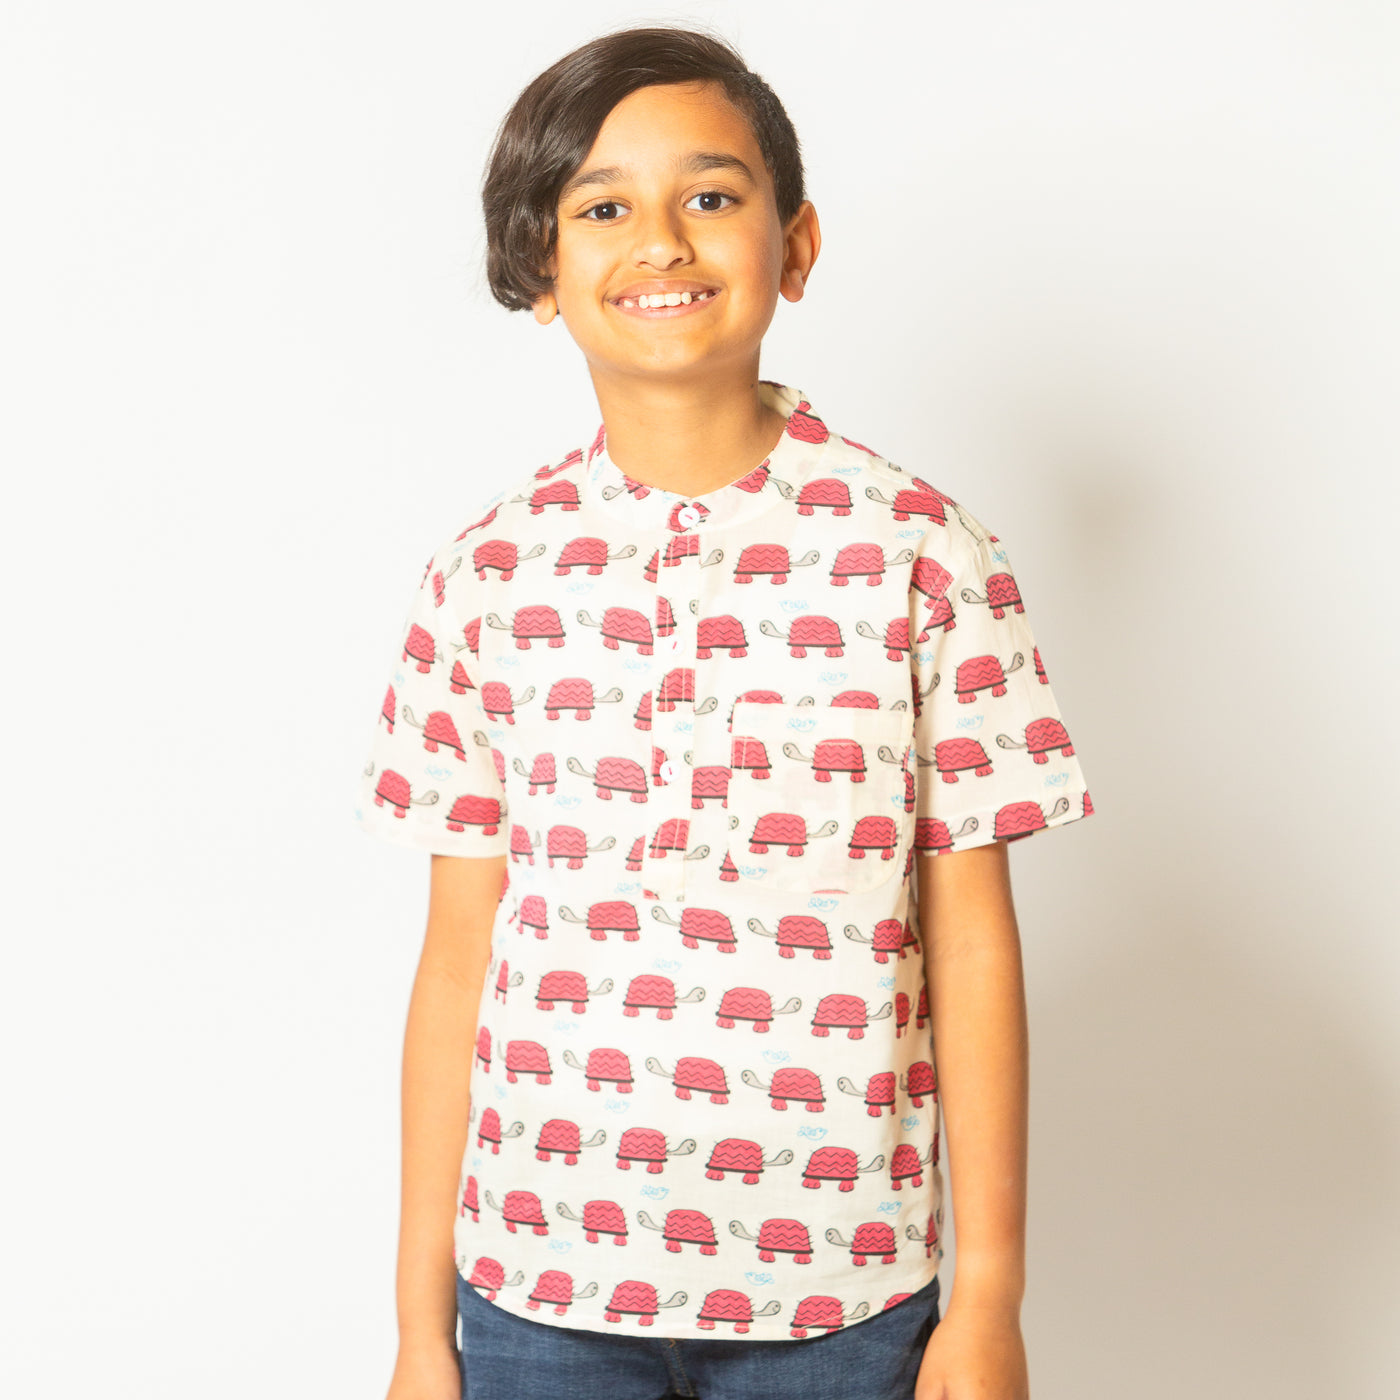 Kavan - Red Turtle Print Button Down Shirt for Boys